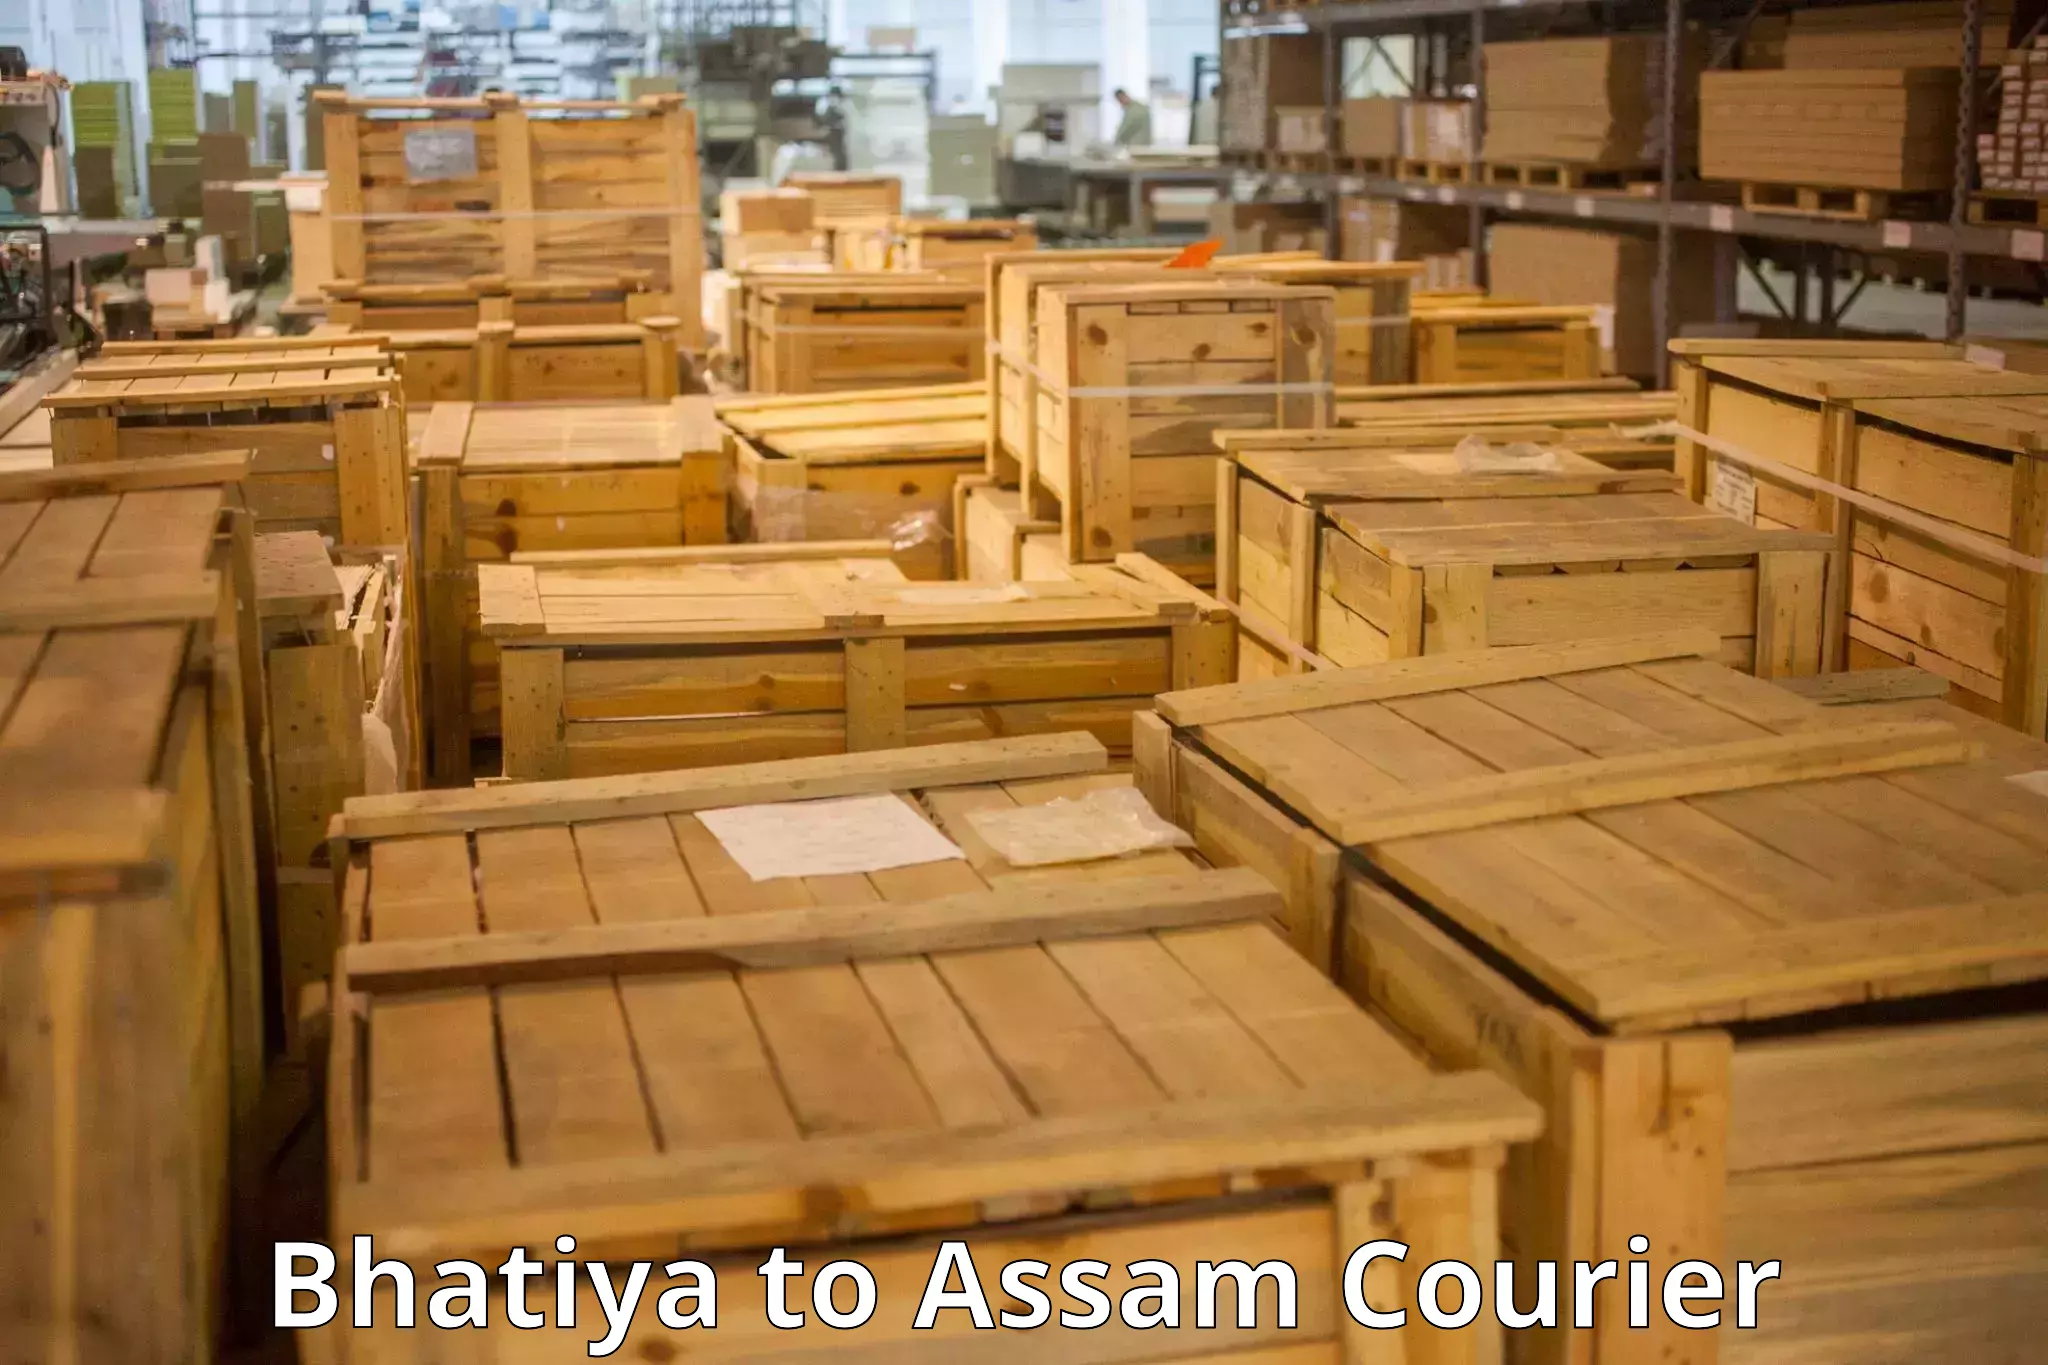 Emergency baggage service Bhatiya to Lala Assam